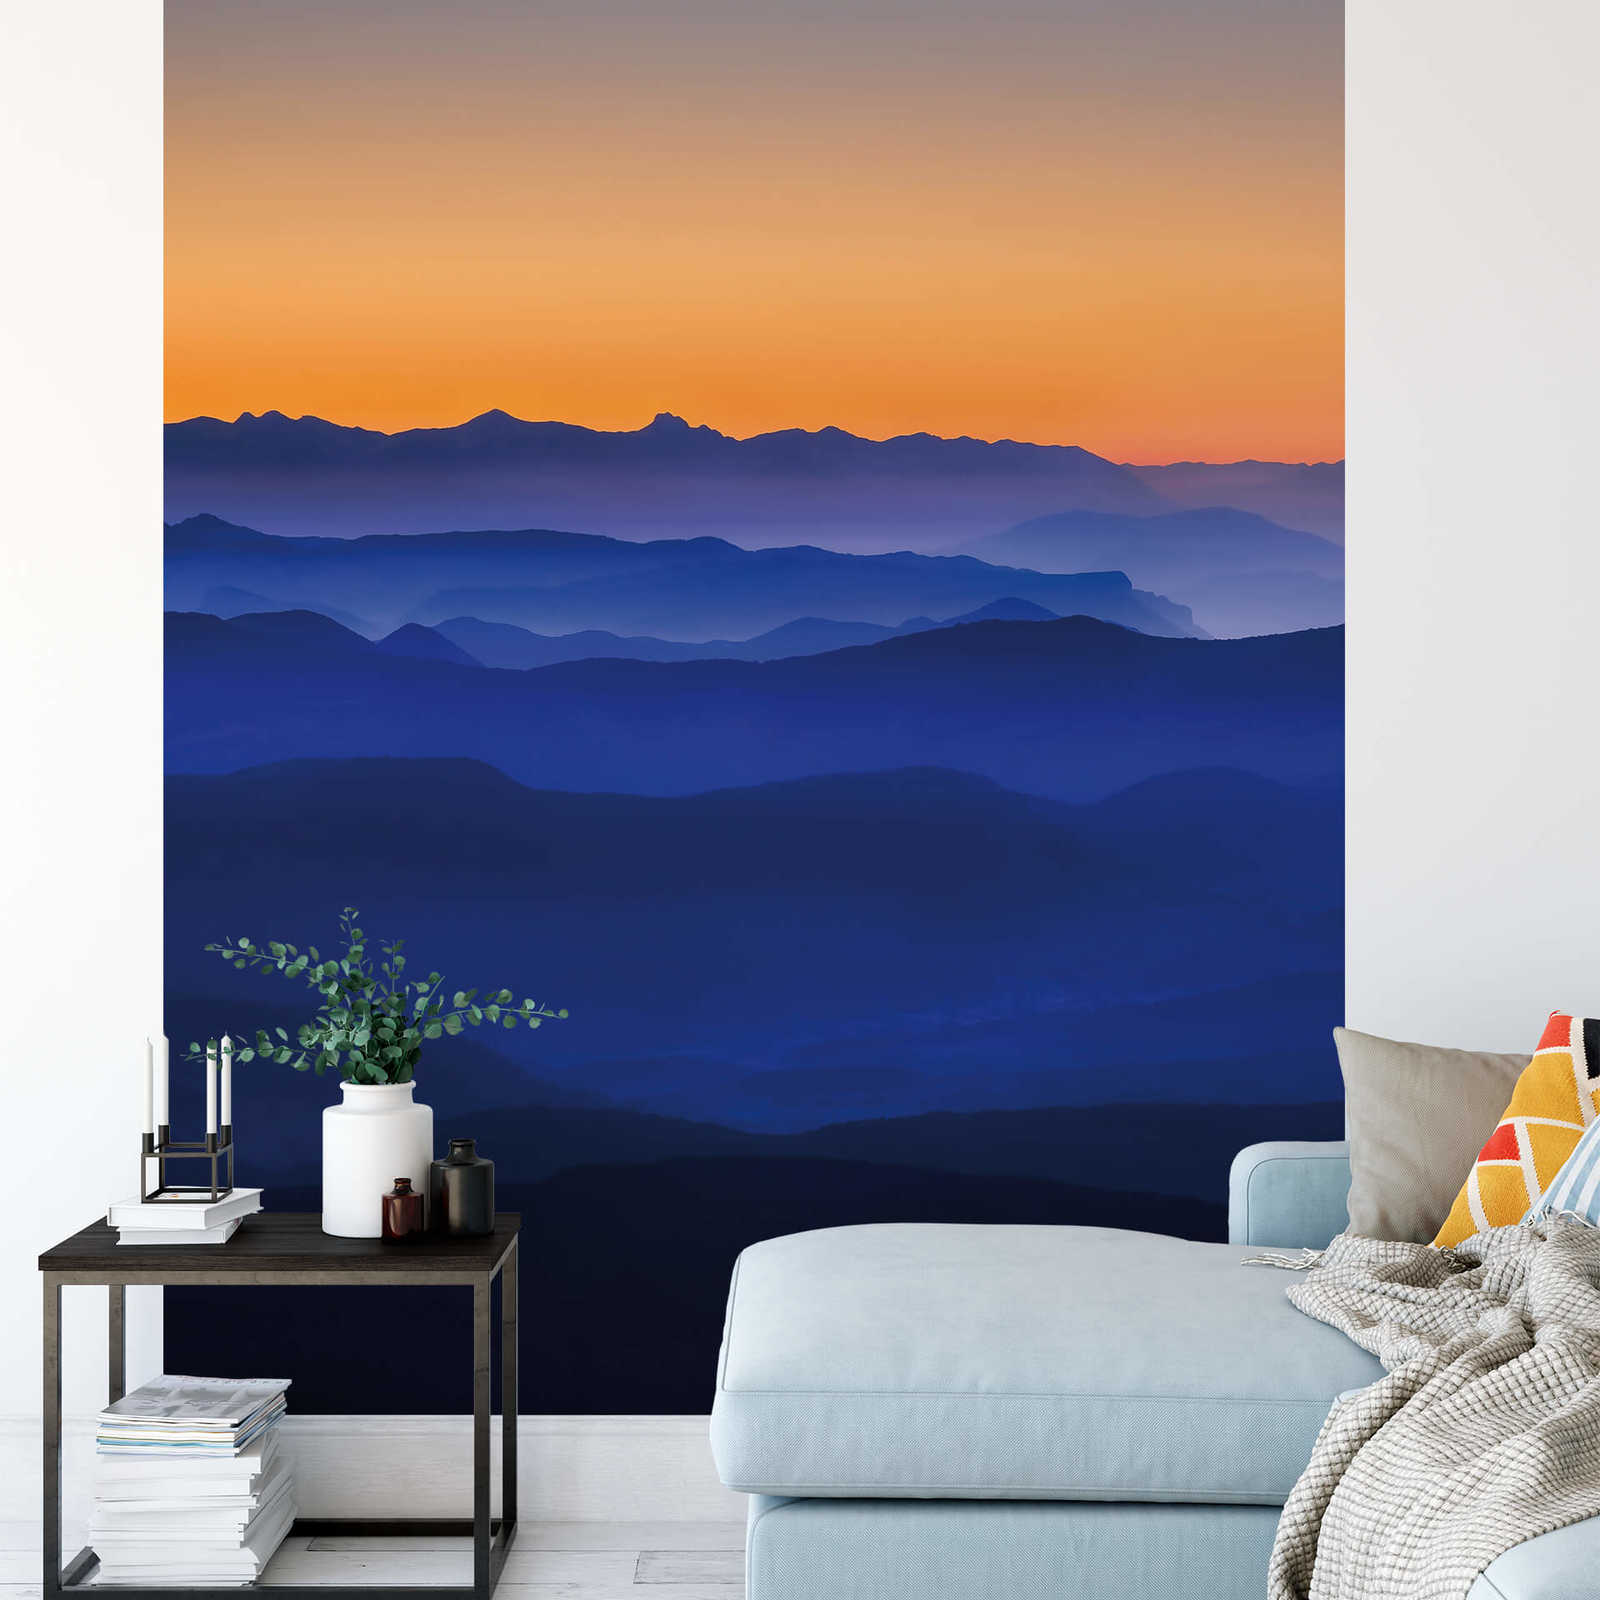             Photo wallpaper mountains at dusk - blue, orange, yellow
        